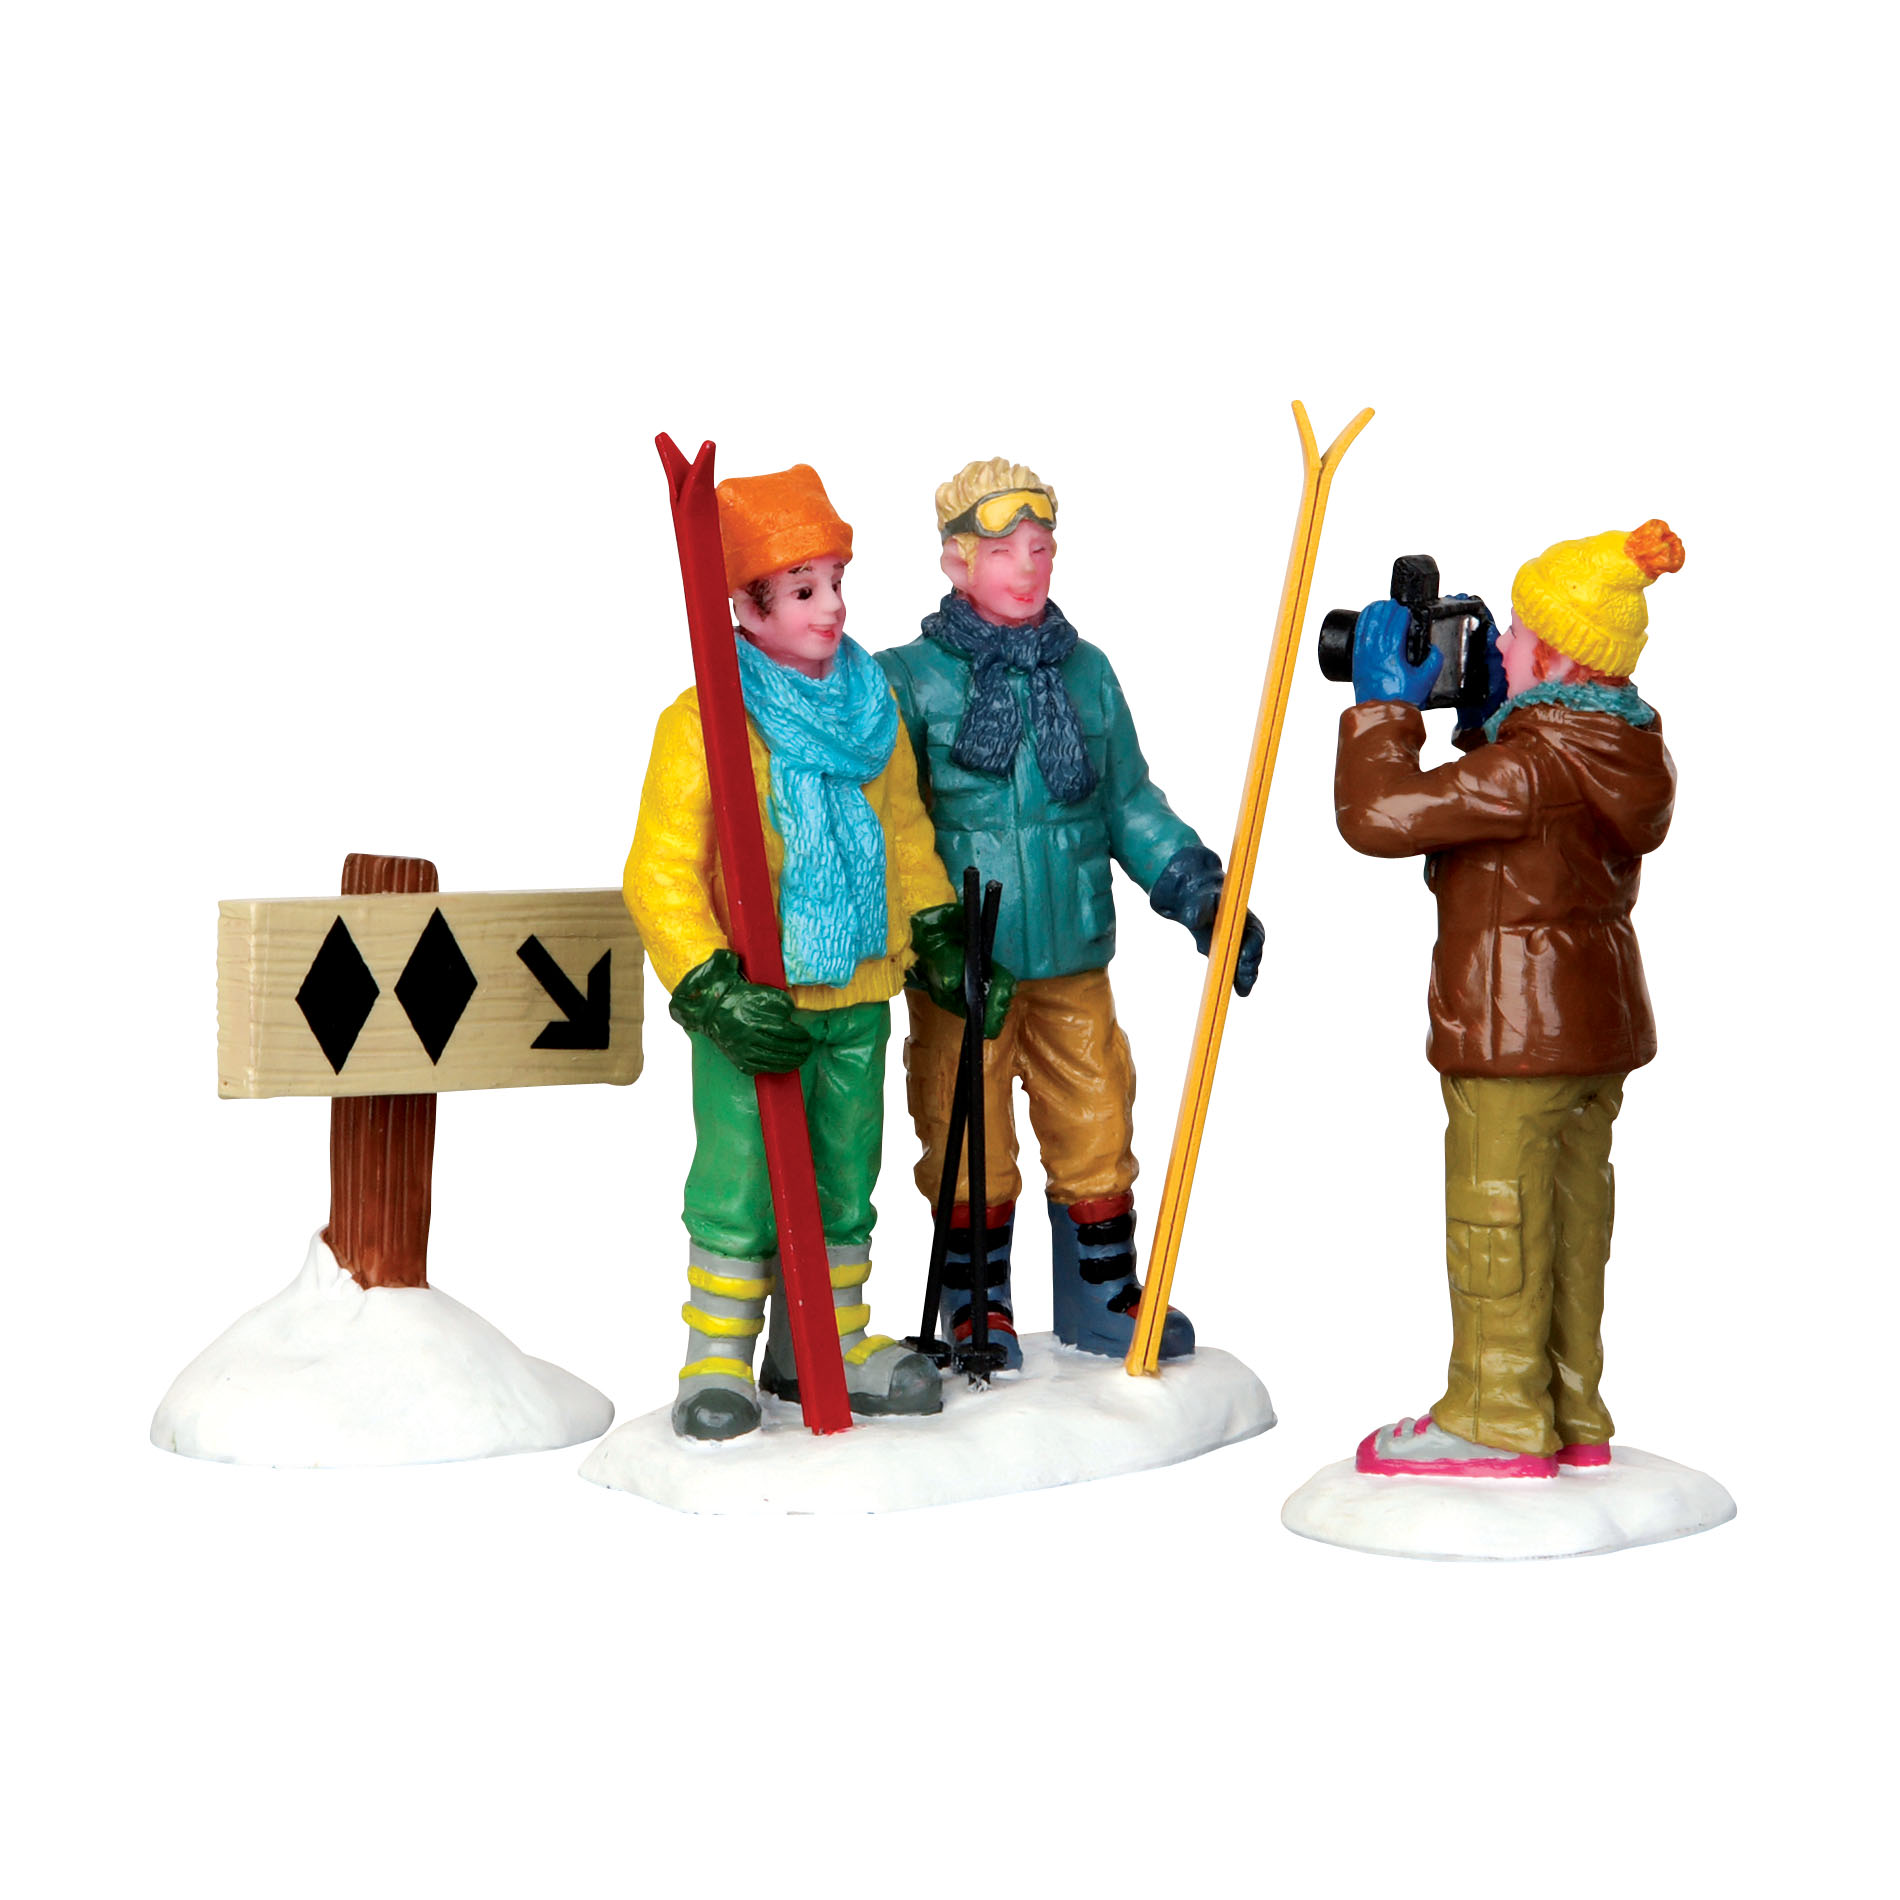 Lemax Village Collection Christmas Village Figurine, Summit Snaps, 3 set